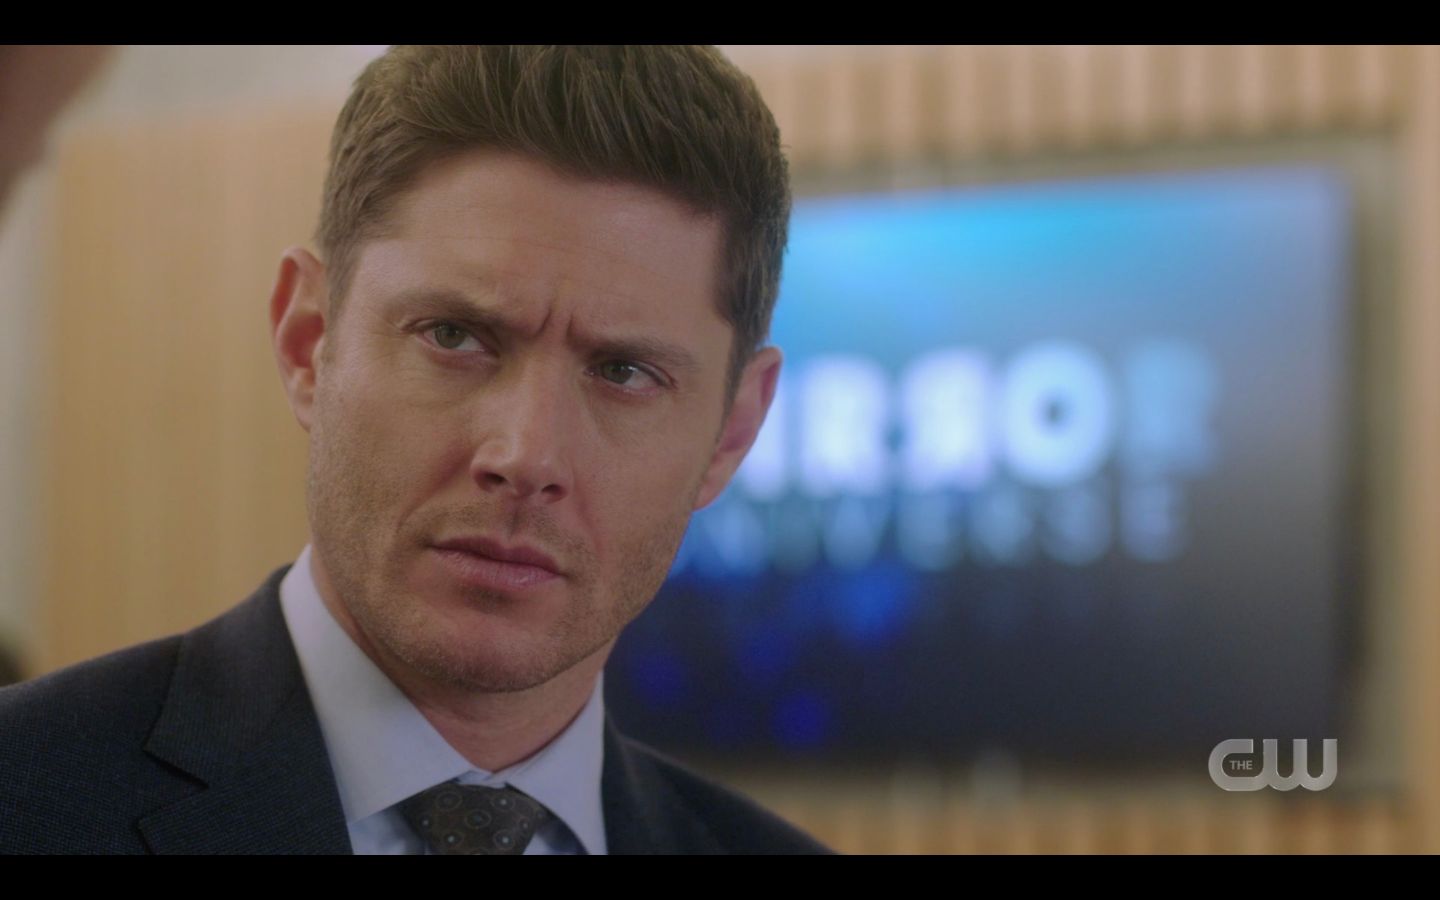 Dean Winchester in FBI suit at Mirror Universe SPN 14.20